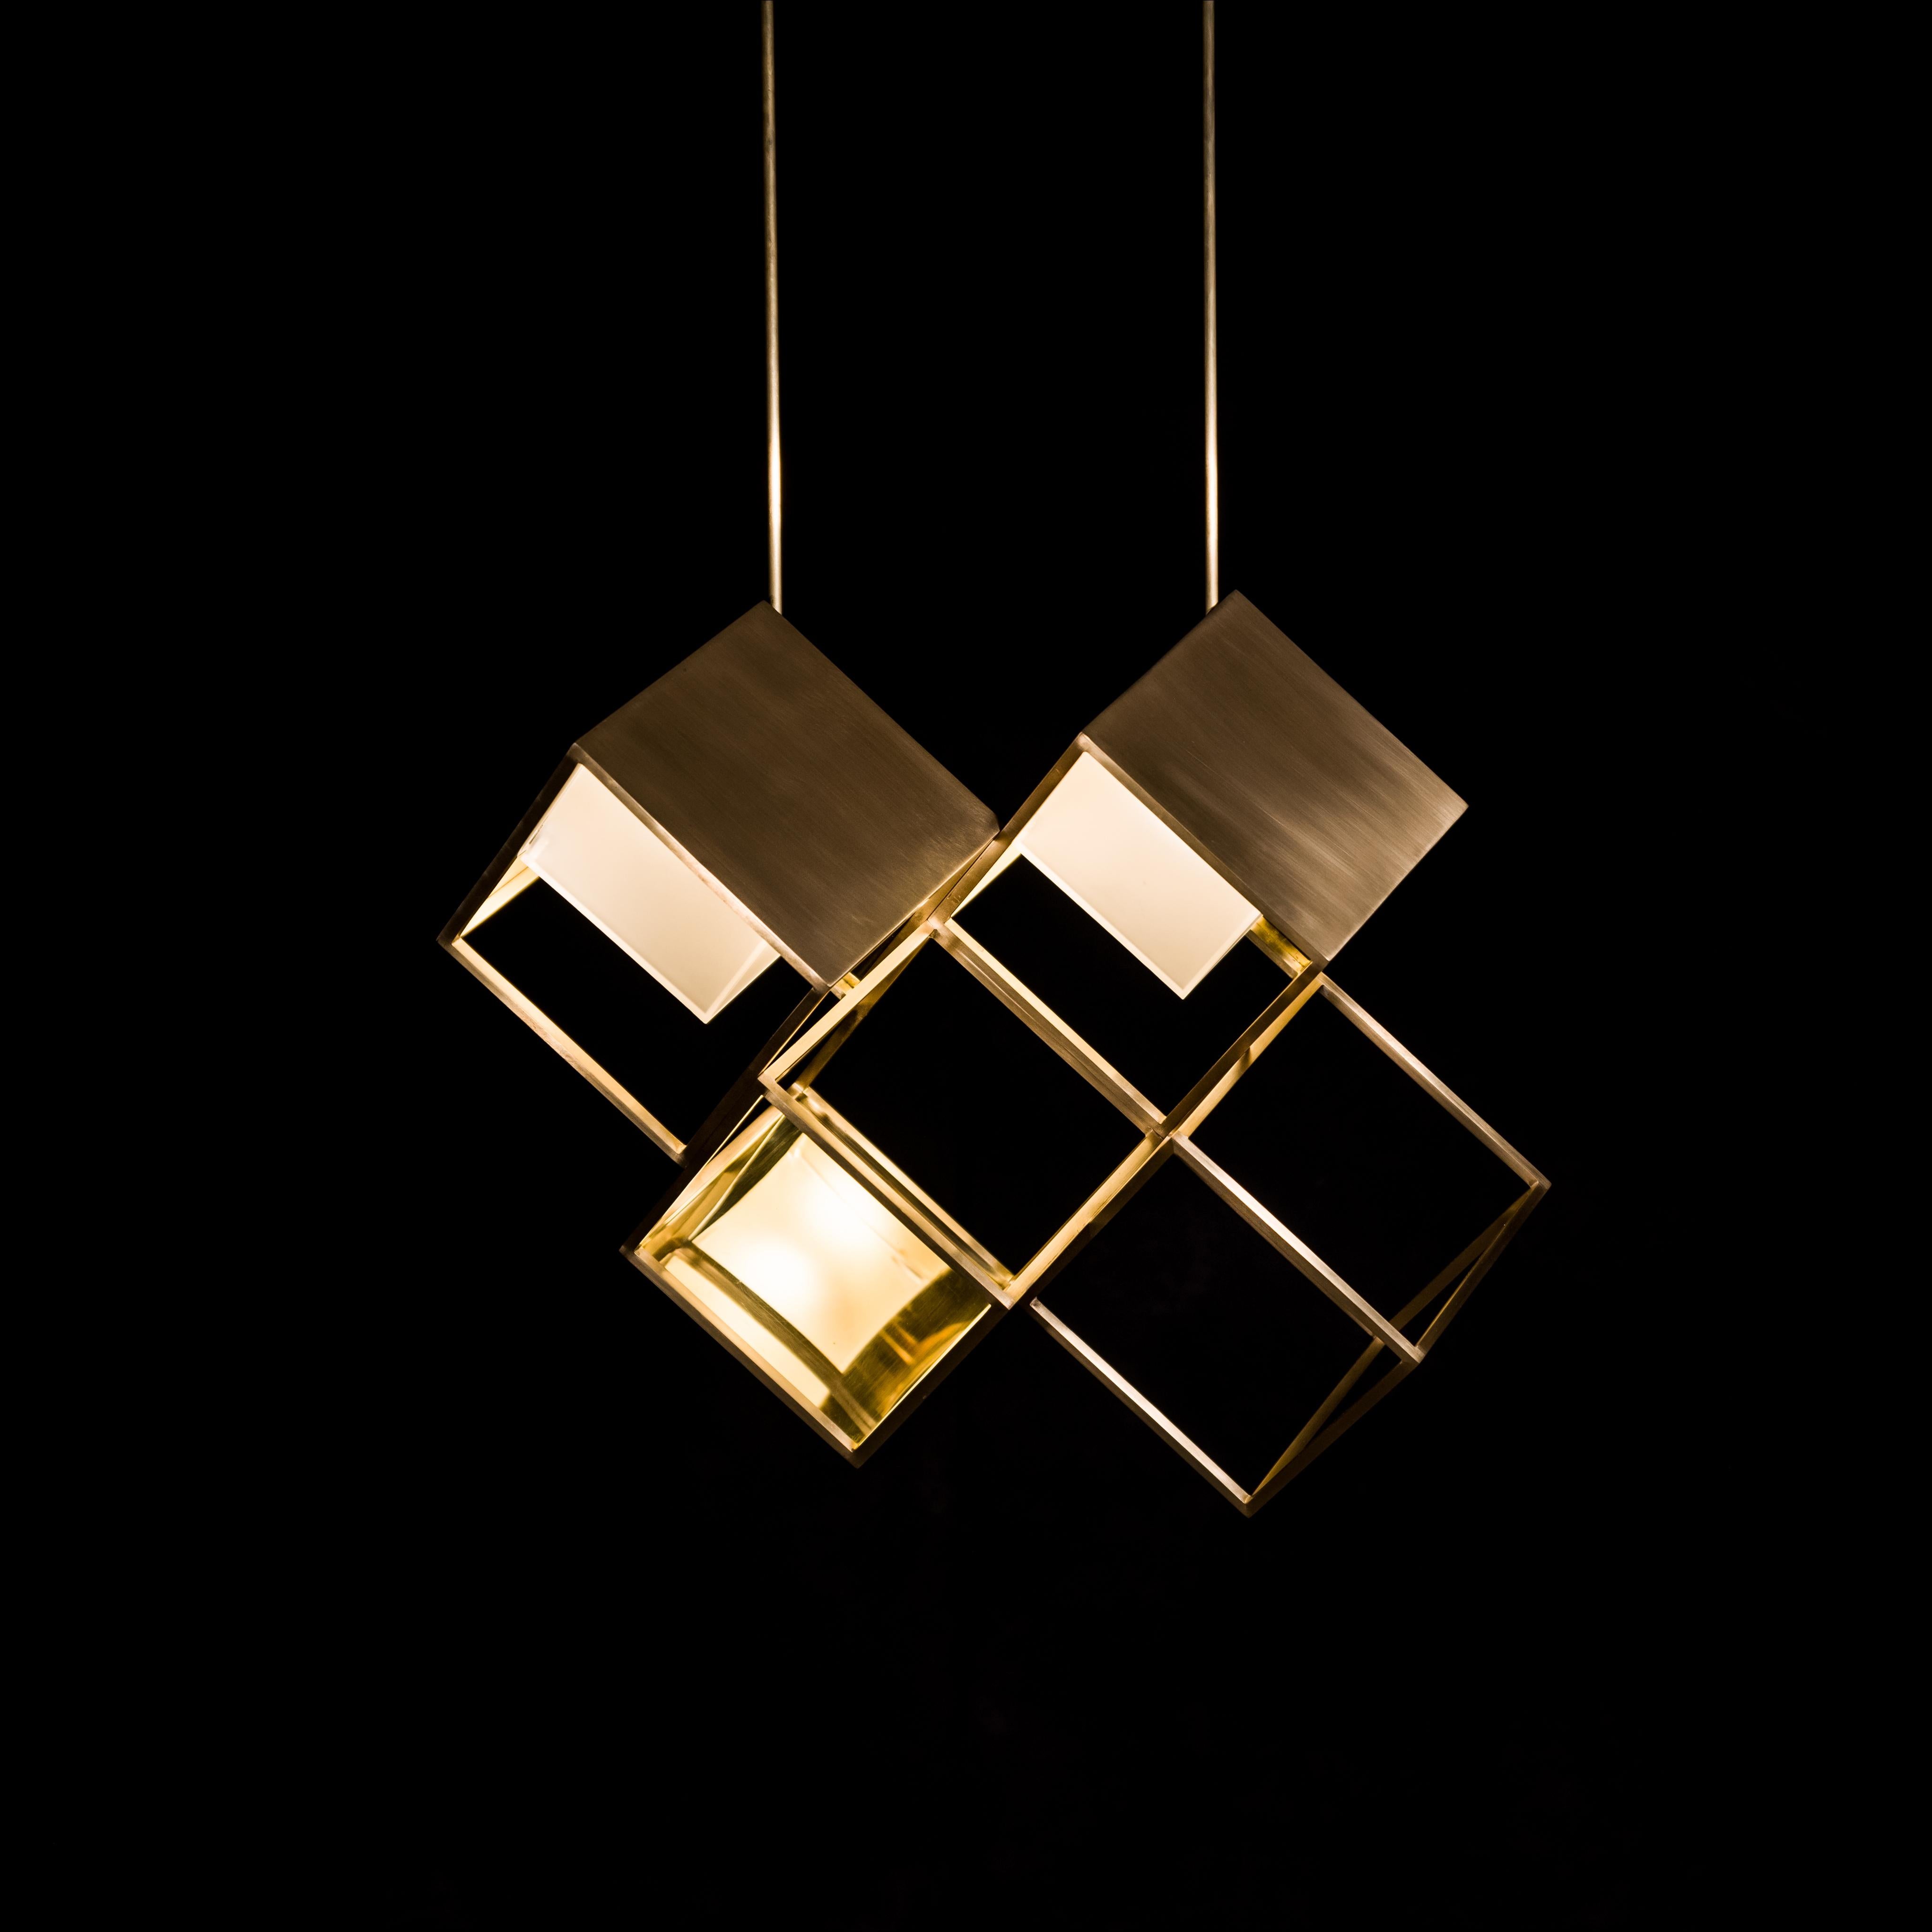 Modern Lattis 4 Chandelier Lighting Brass by Diaphan Studio, REP by Tuleste Factory